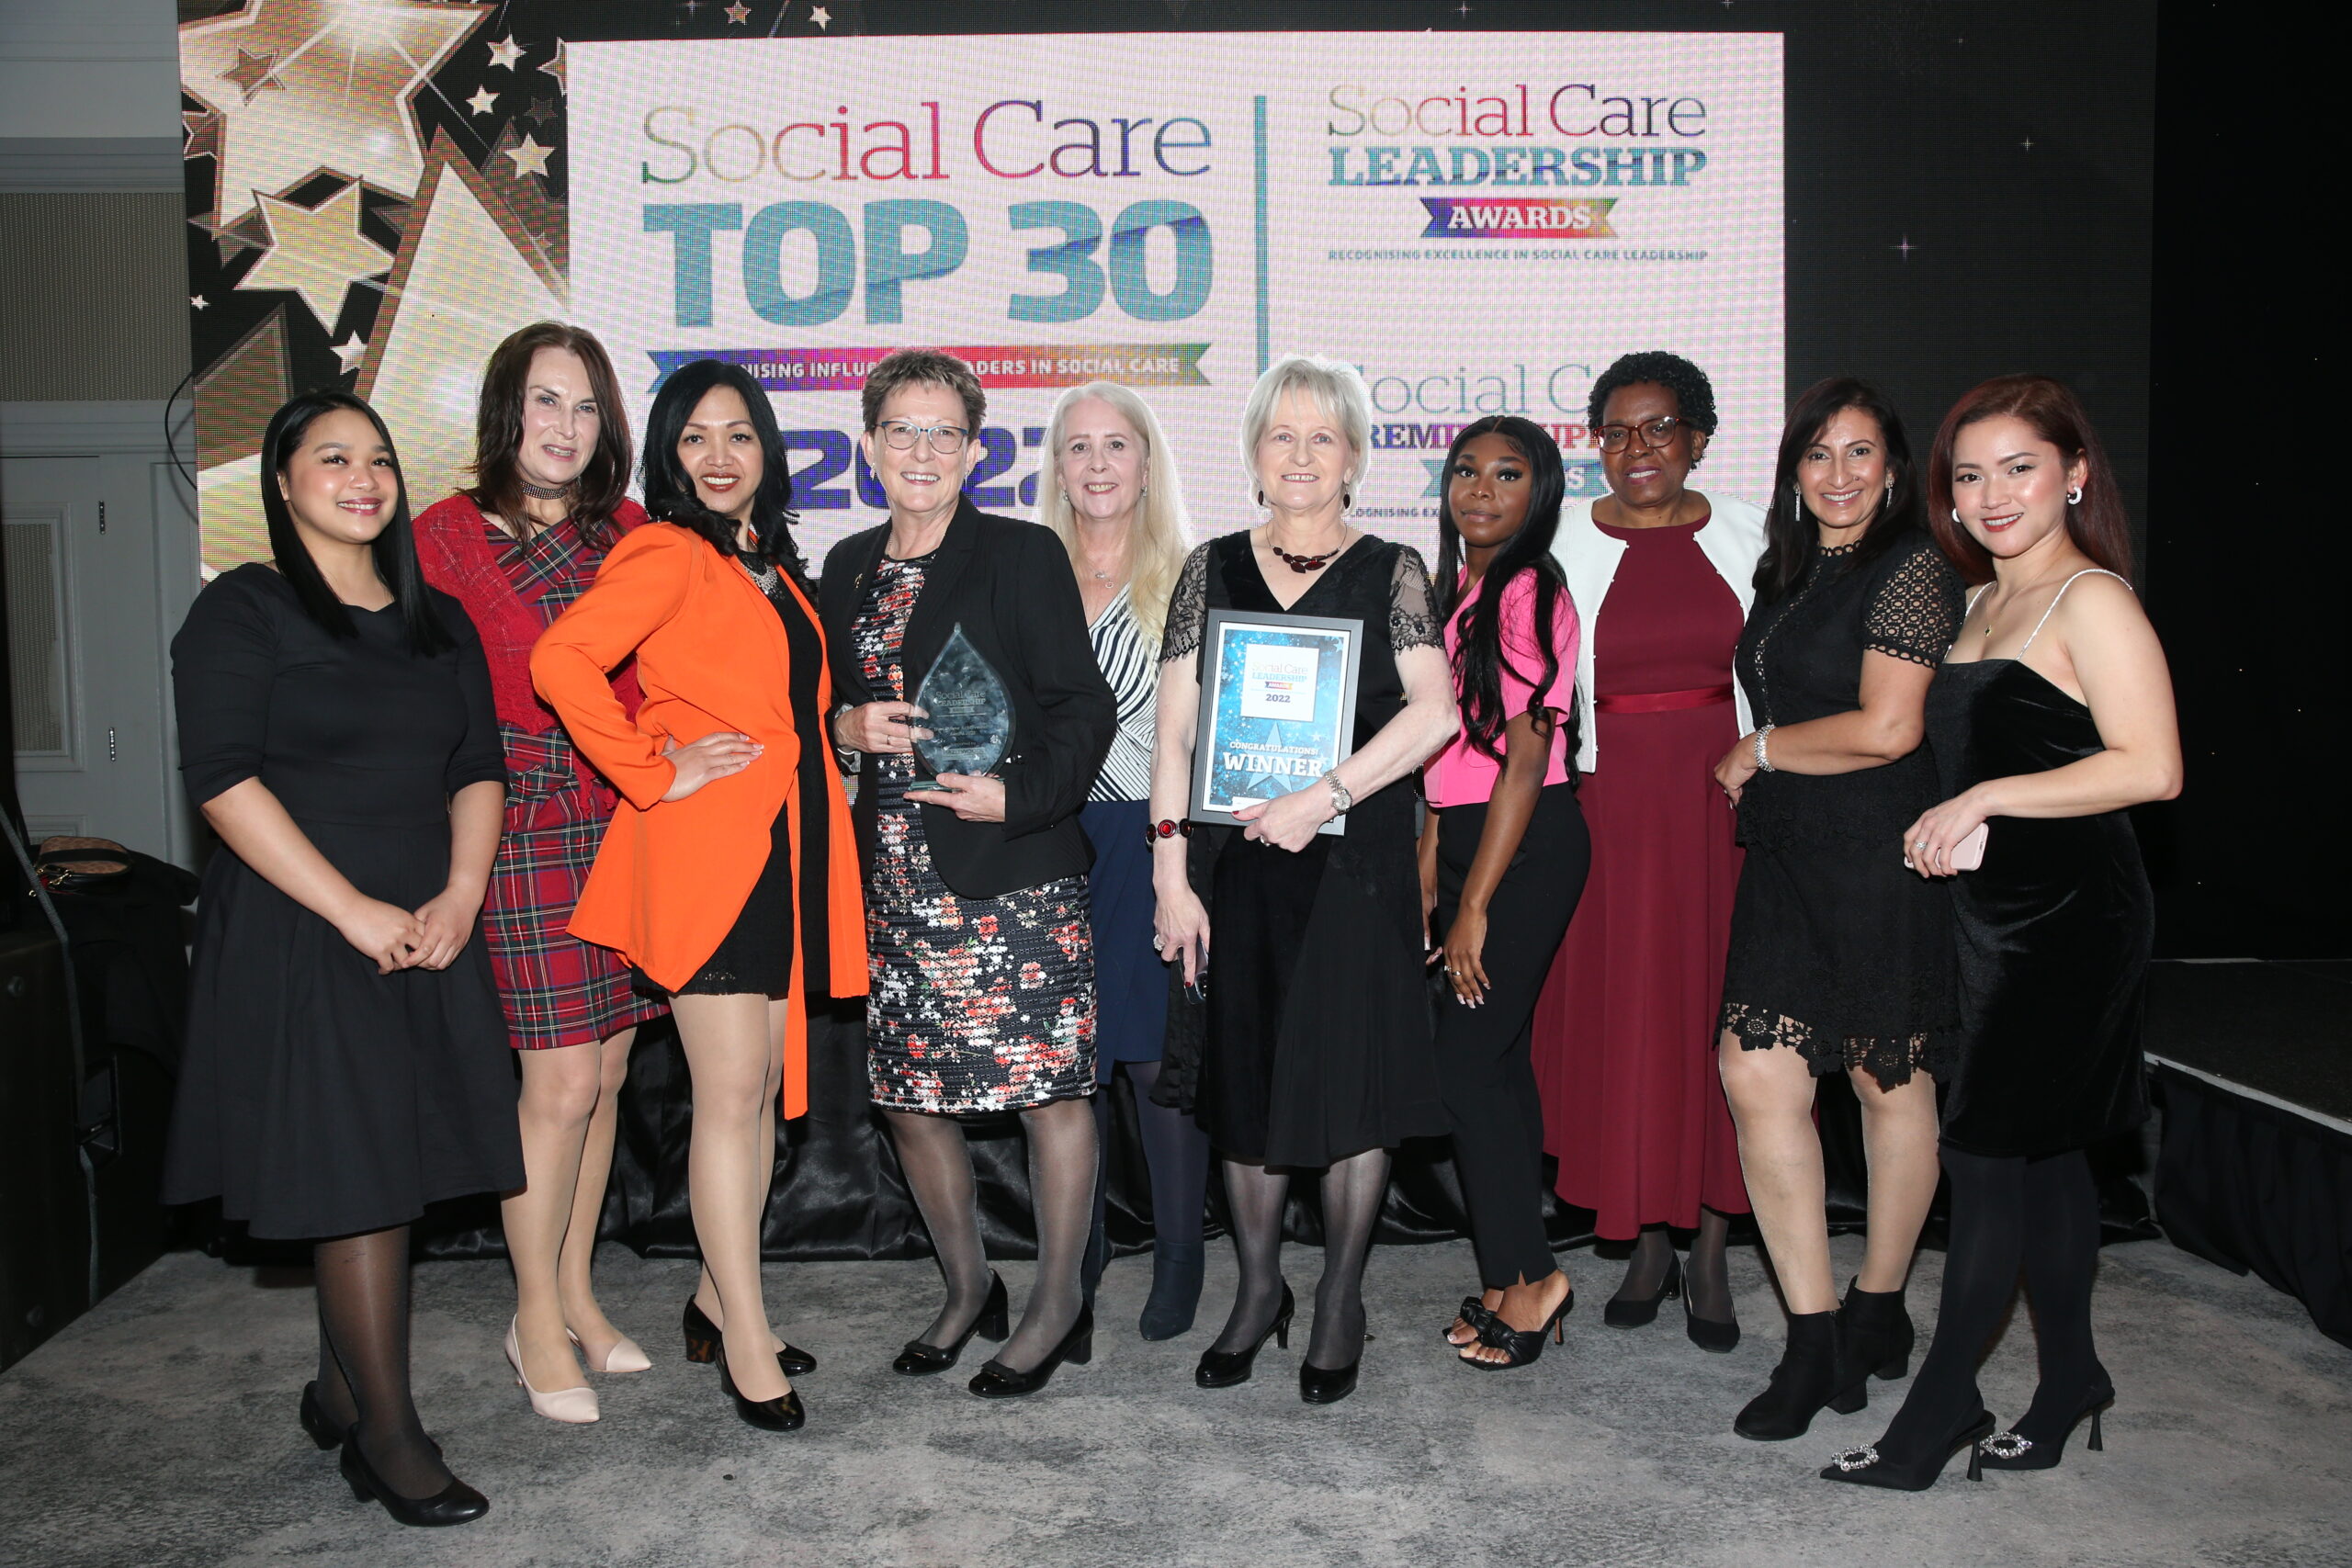 Winner in The Social Care Leadership Awards!